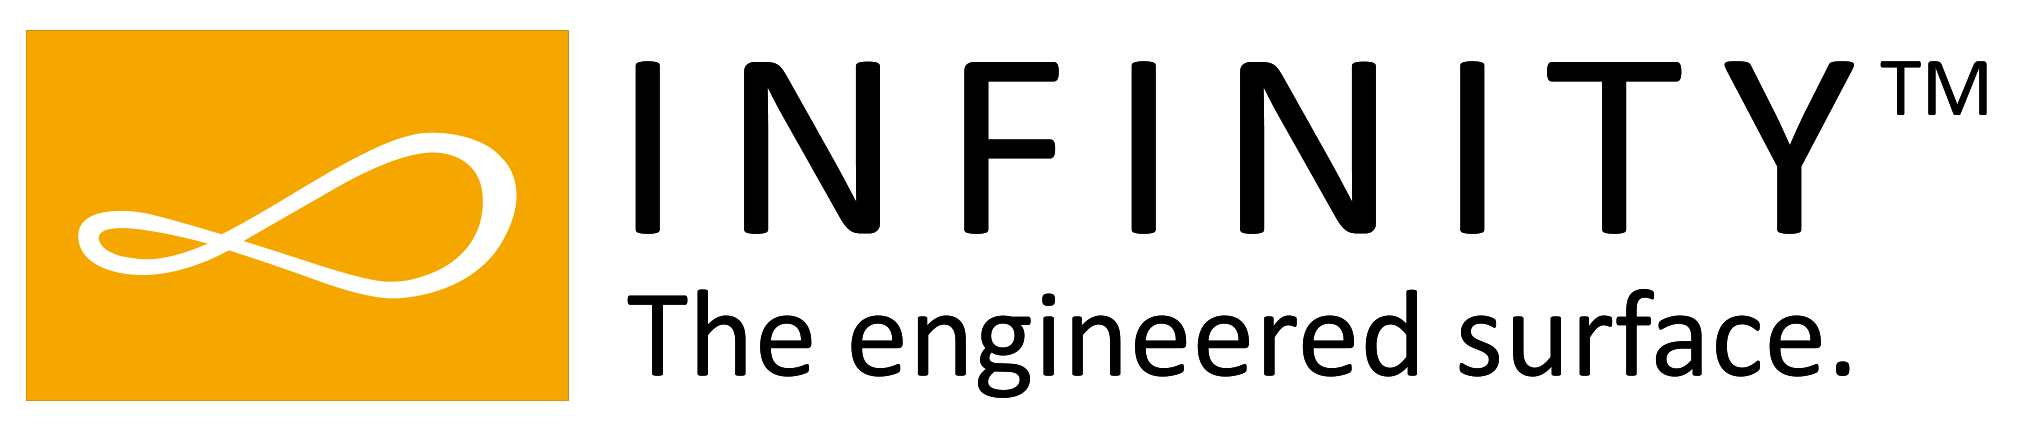 Logo de Infinity